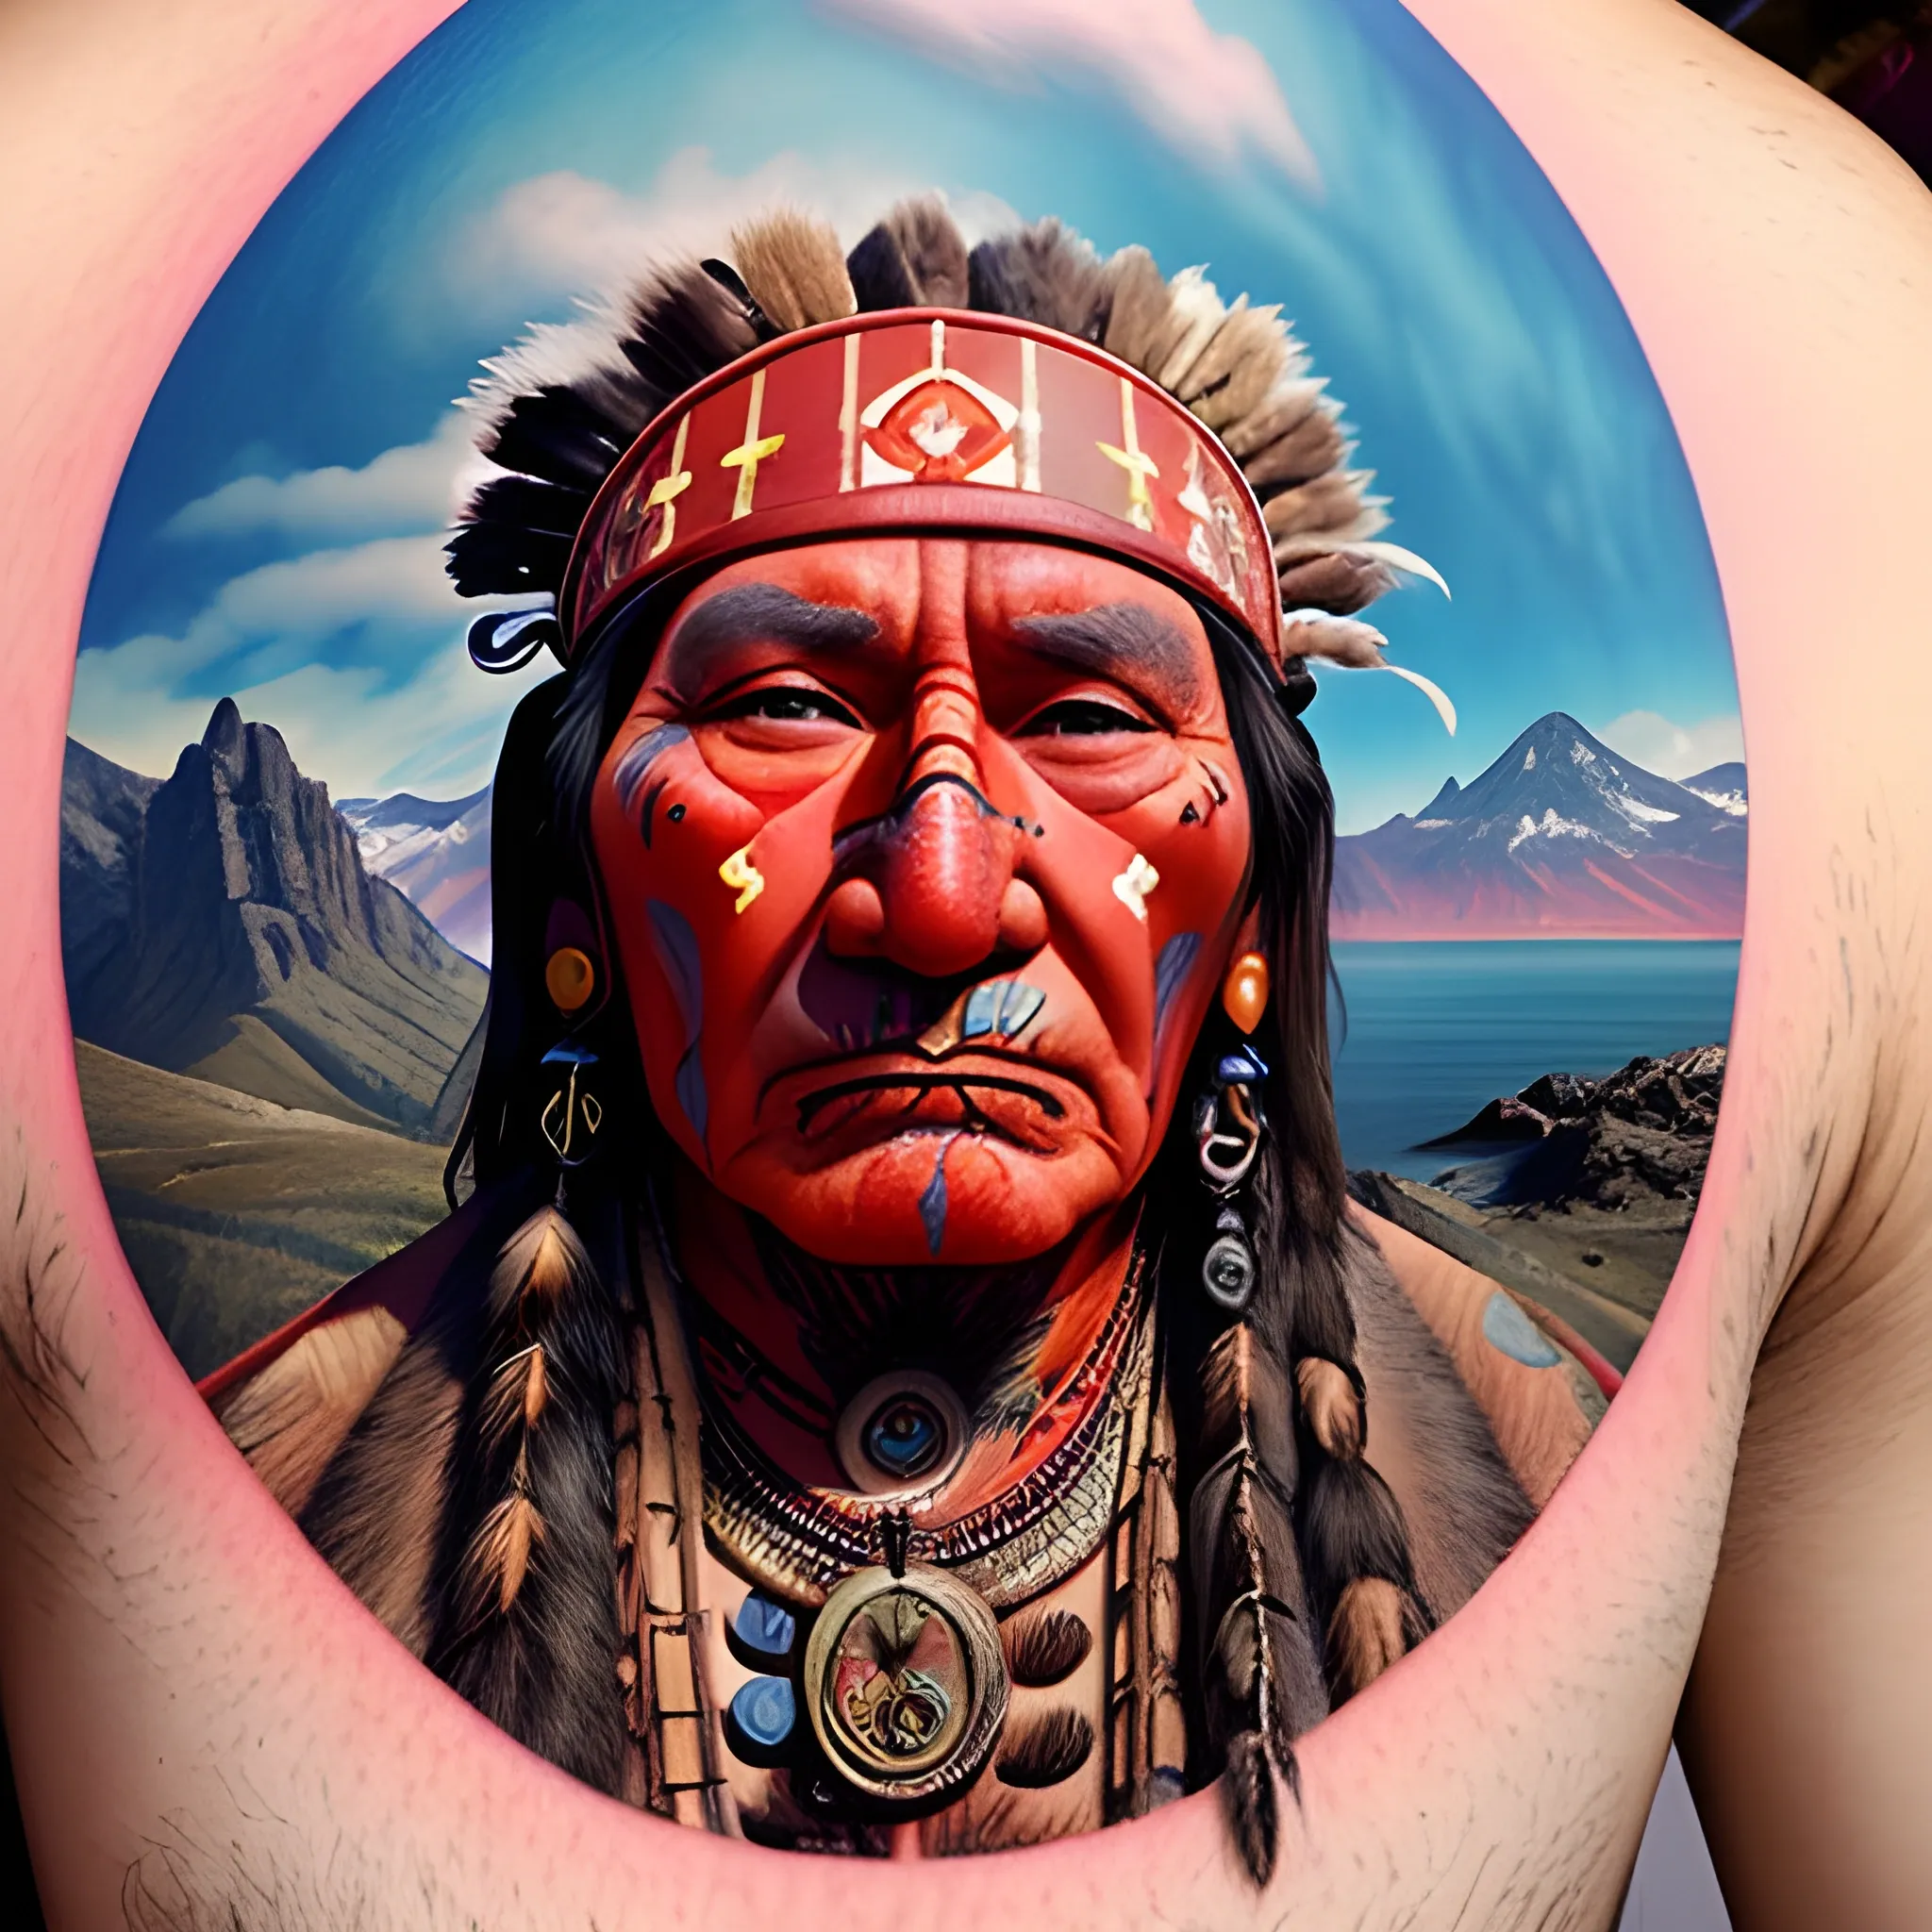 face of chief redskin man. mountin landscape body-tatoo, sea,
athmospher, cloucs Trippy